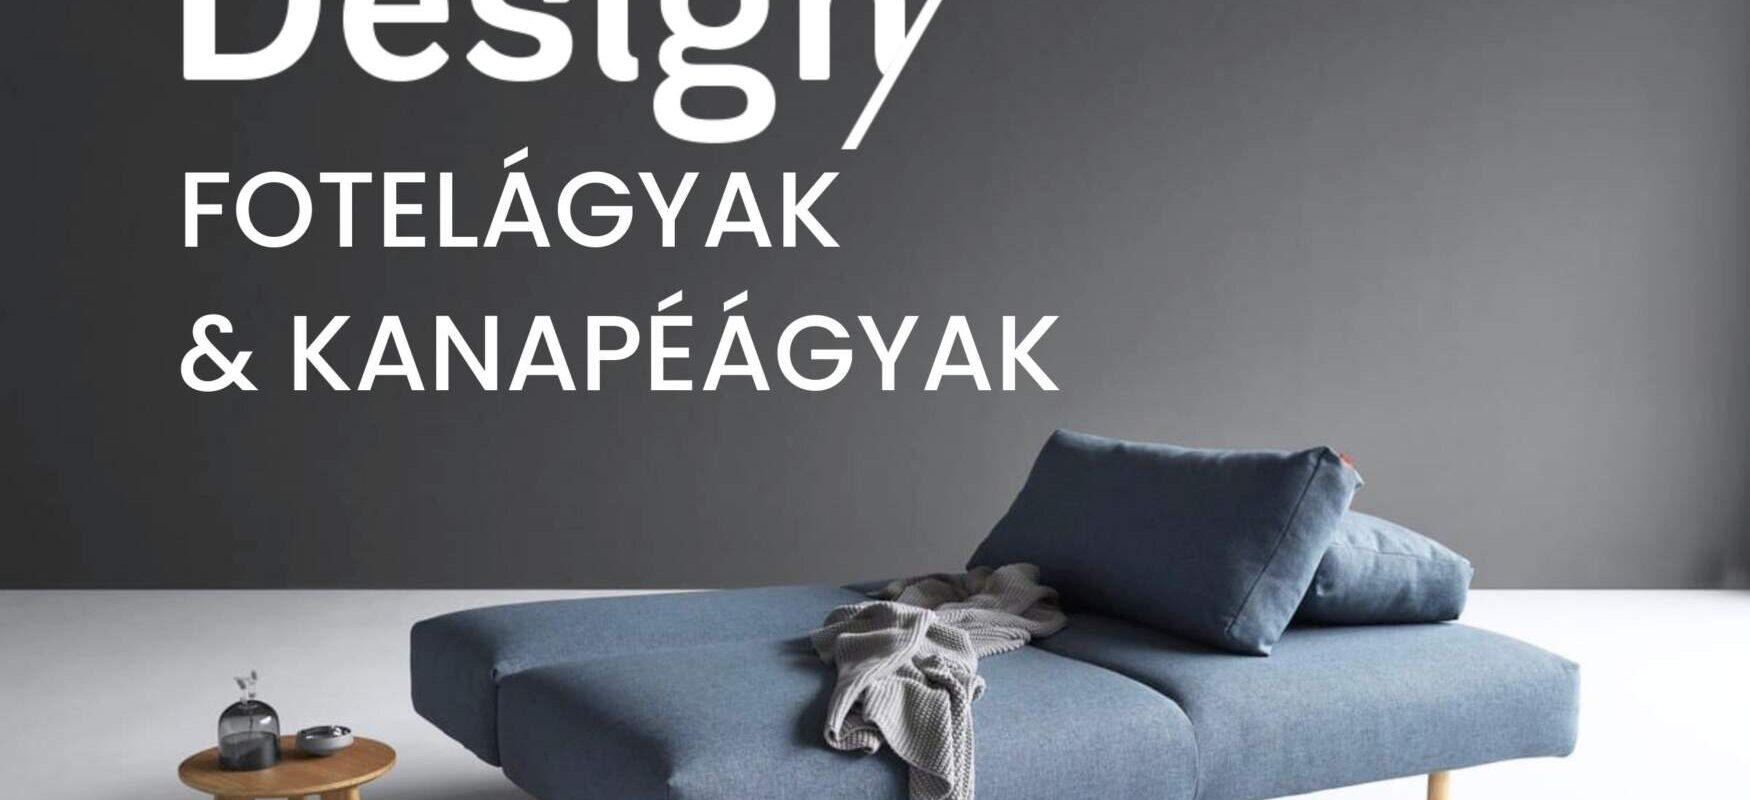 Design fotelágyak kanapéágyak blog